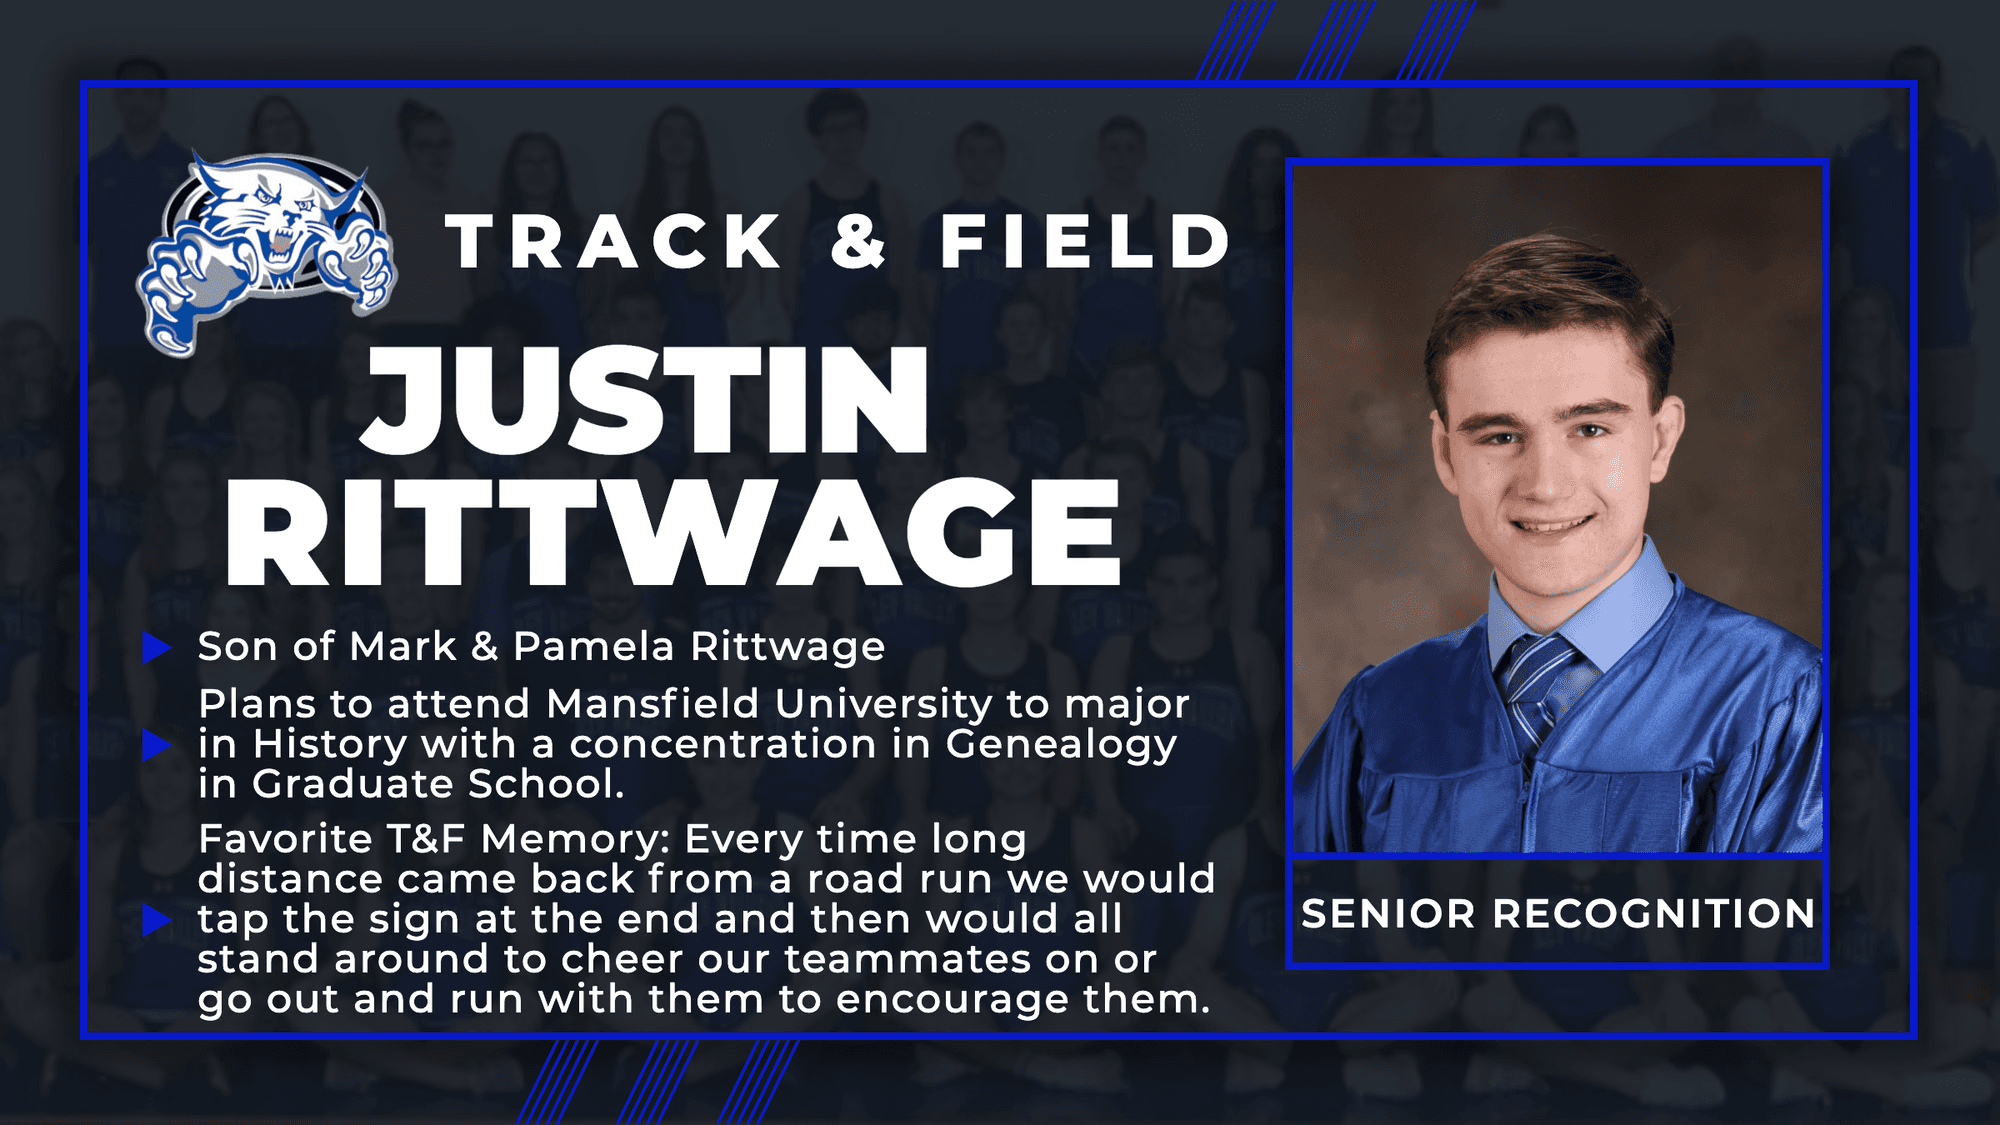 Justin Rittwage, Track & Field